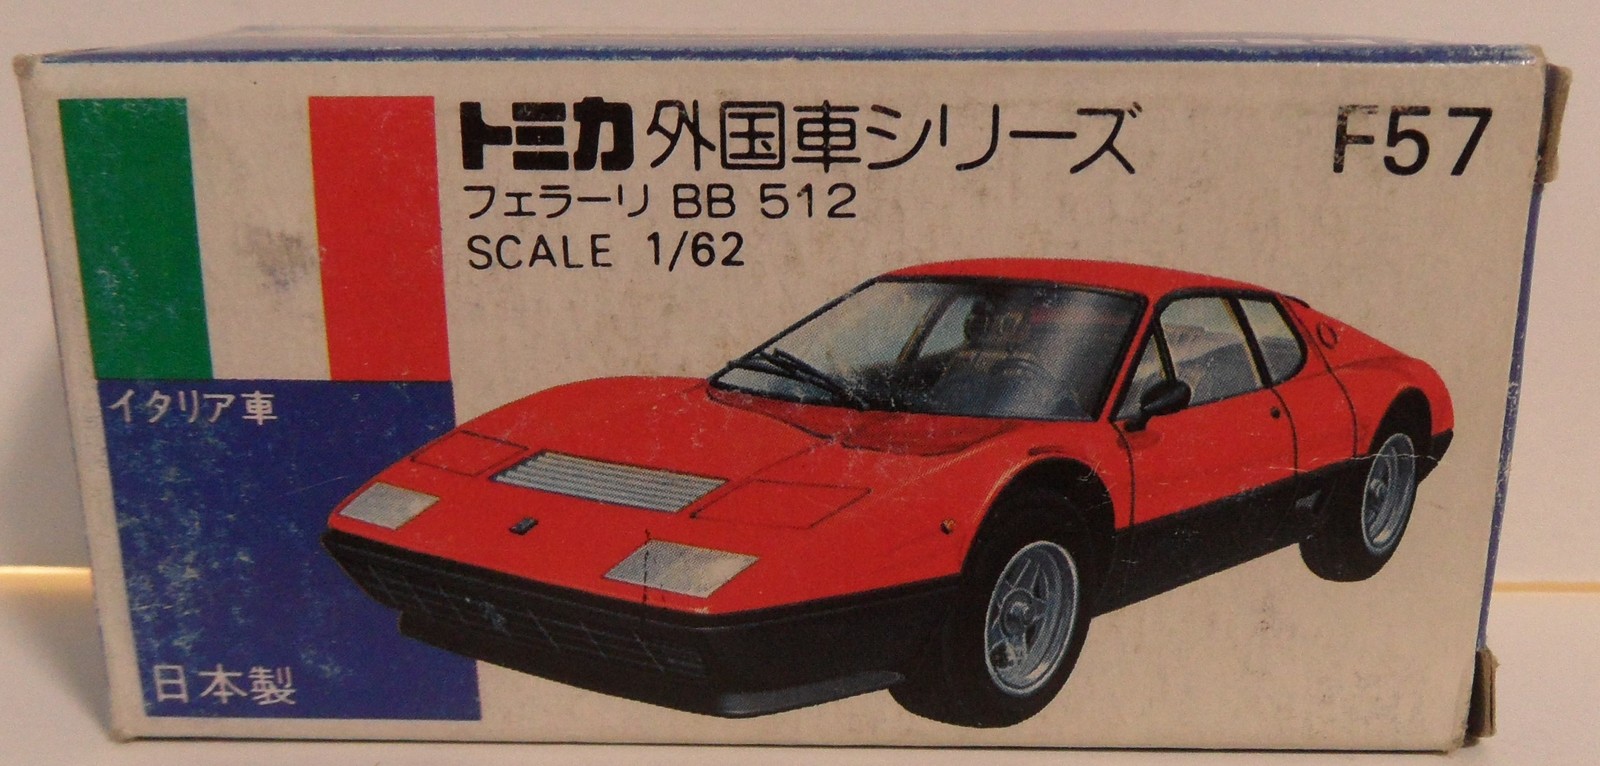 1979 Tomica Red Ferrari BB512/F57 Discontinued Blue Box Die-Cast Car Japan Tomy - $234.00